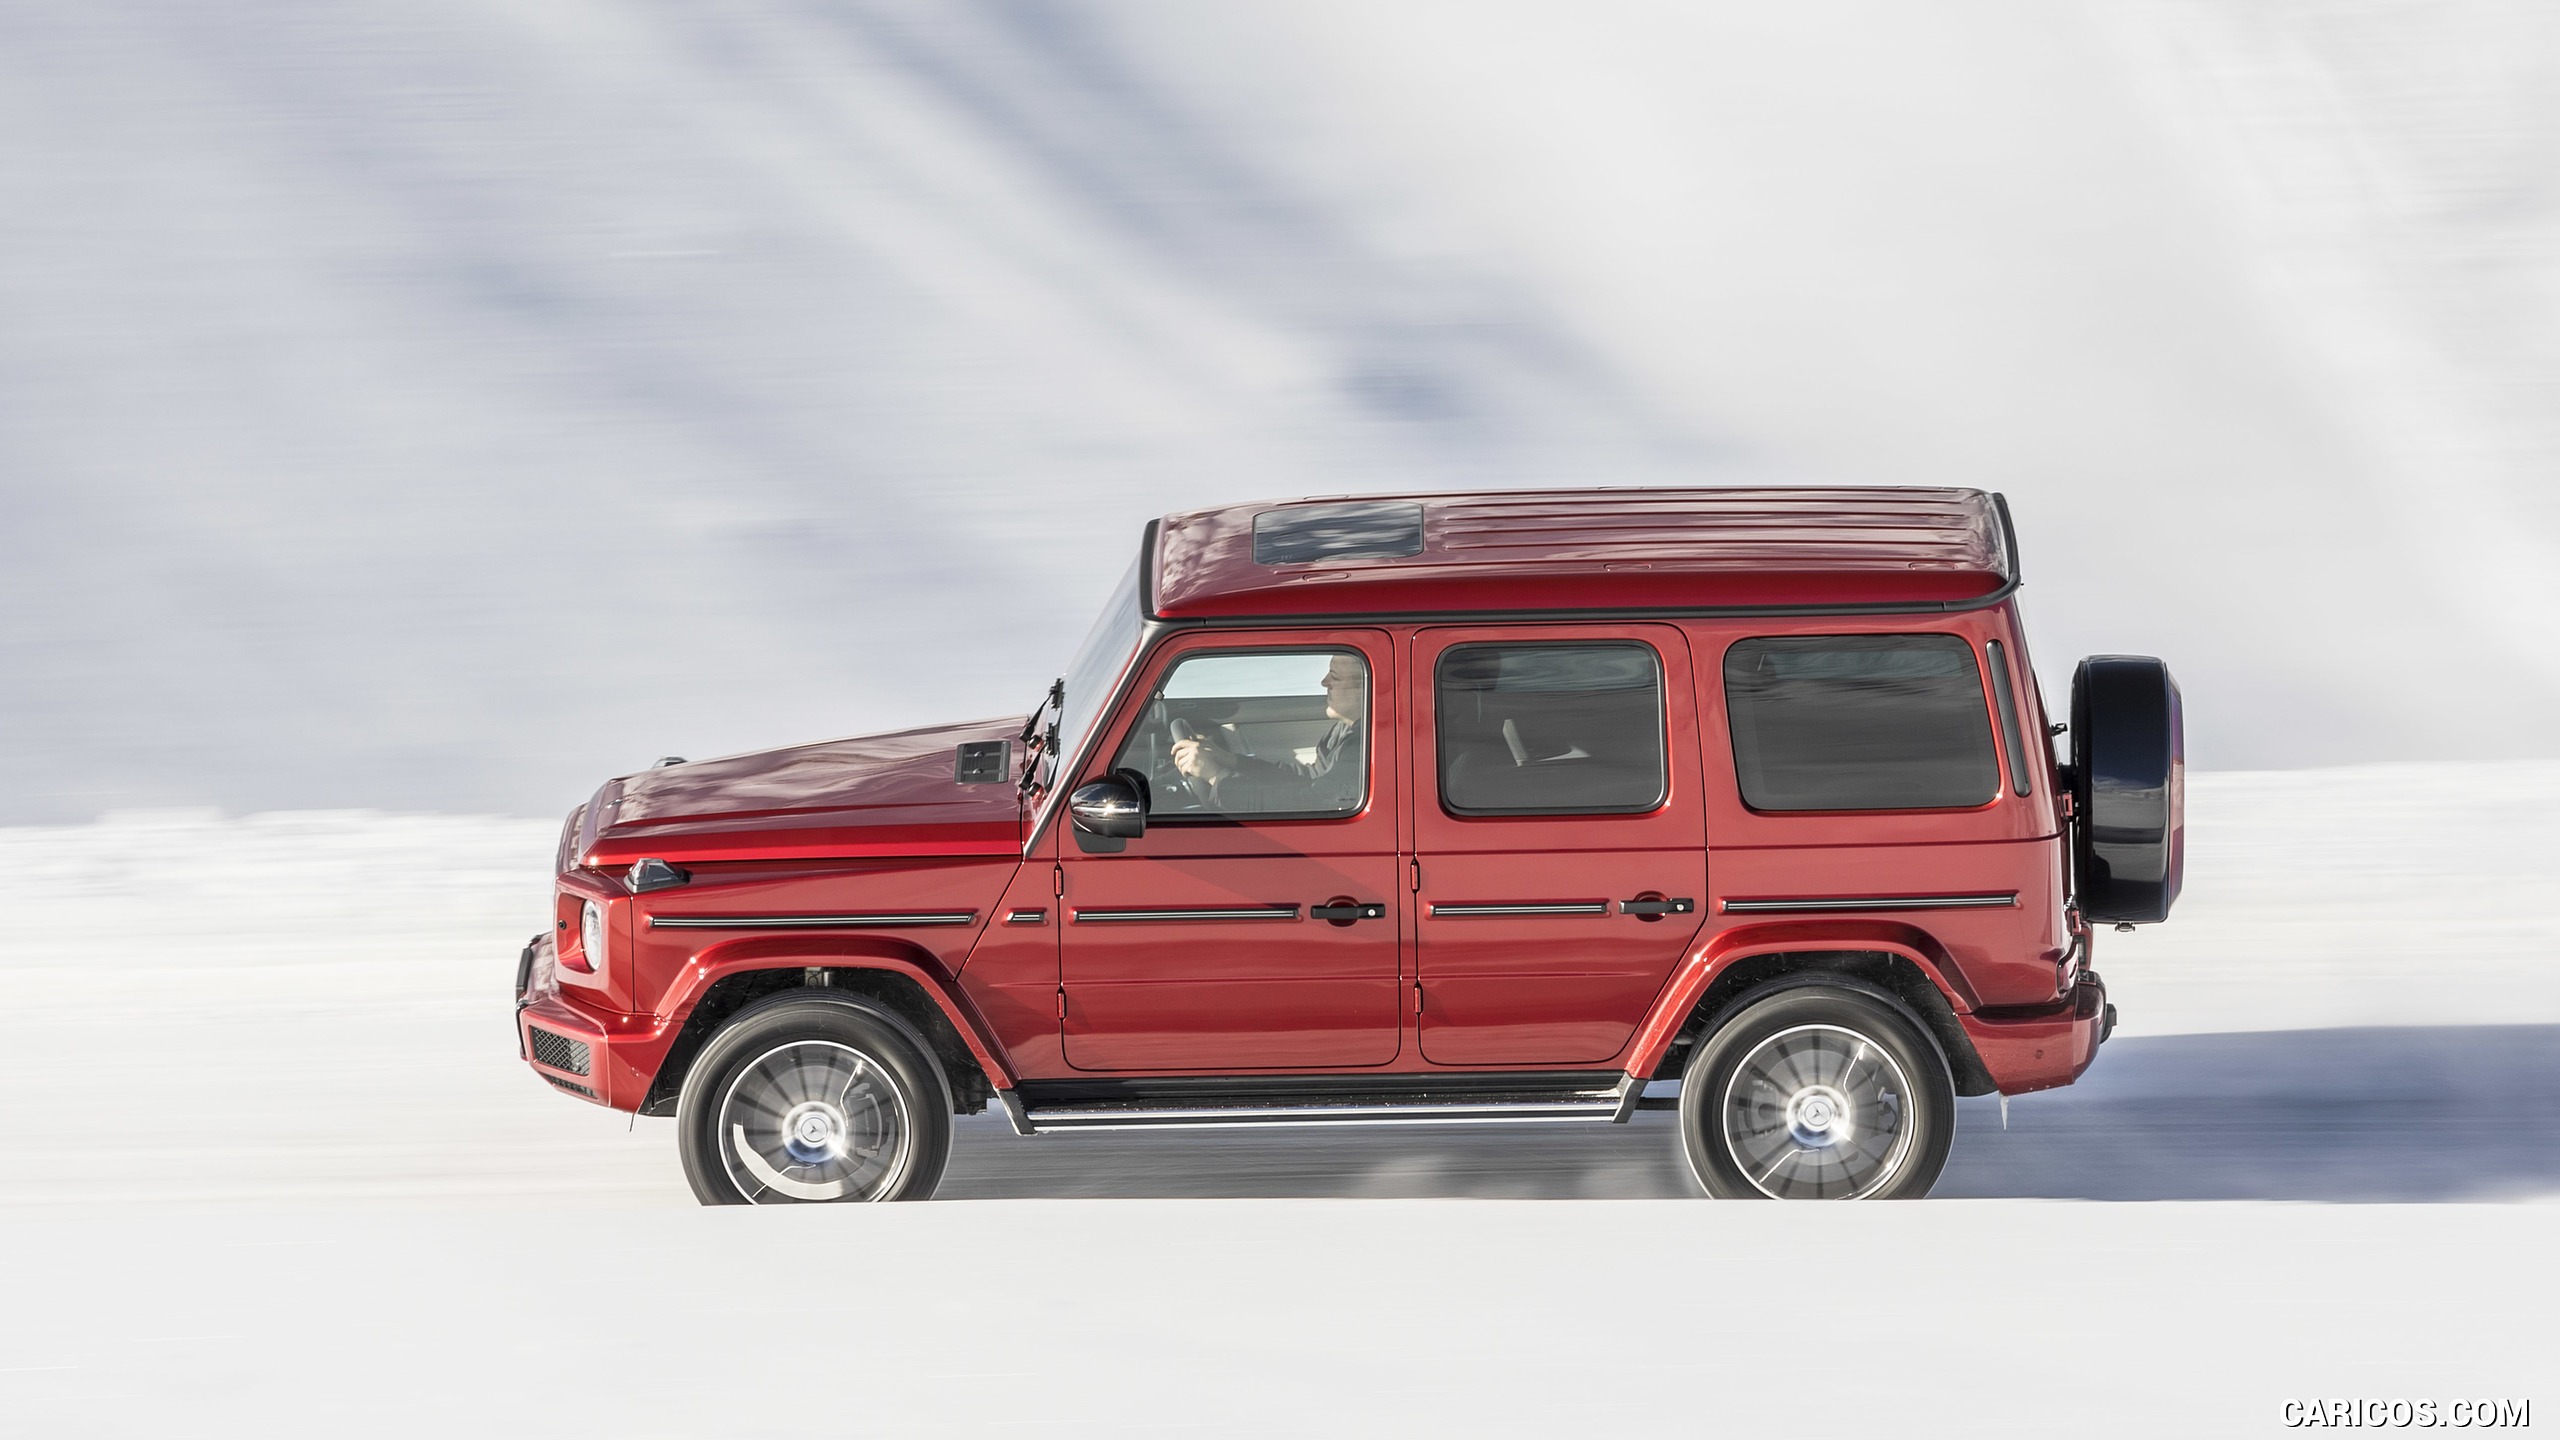 2019 Mercedes-Benz G 350 d (Designo Hyazinth Red Metallic) - In Snow - Side, #5 of 51